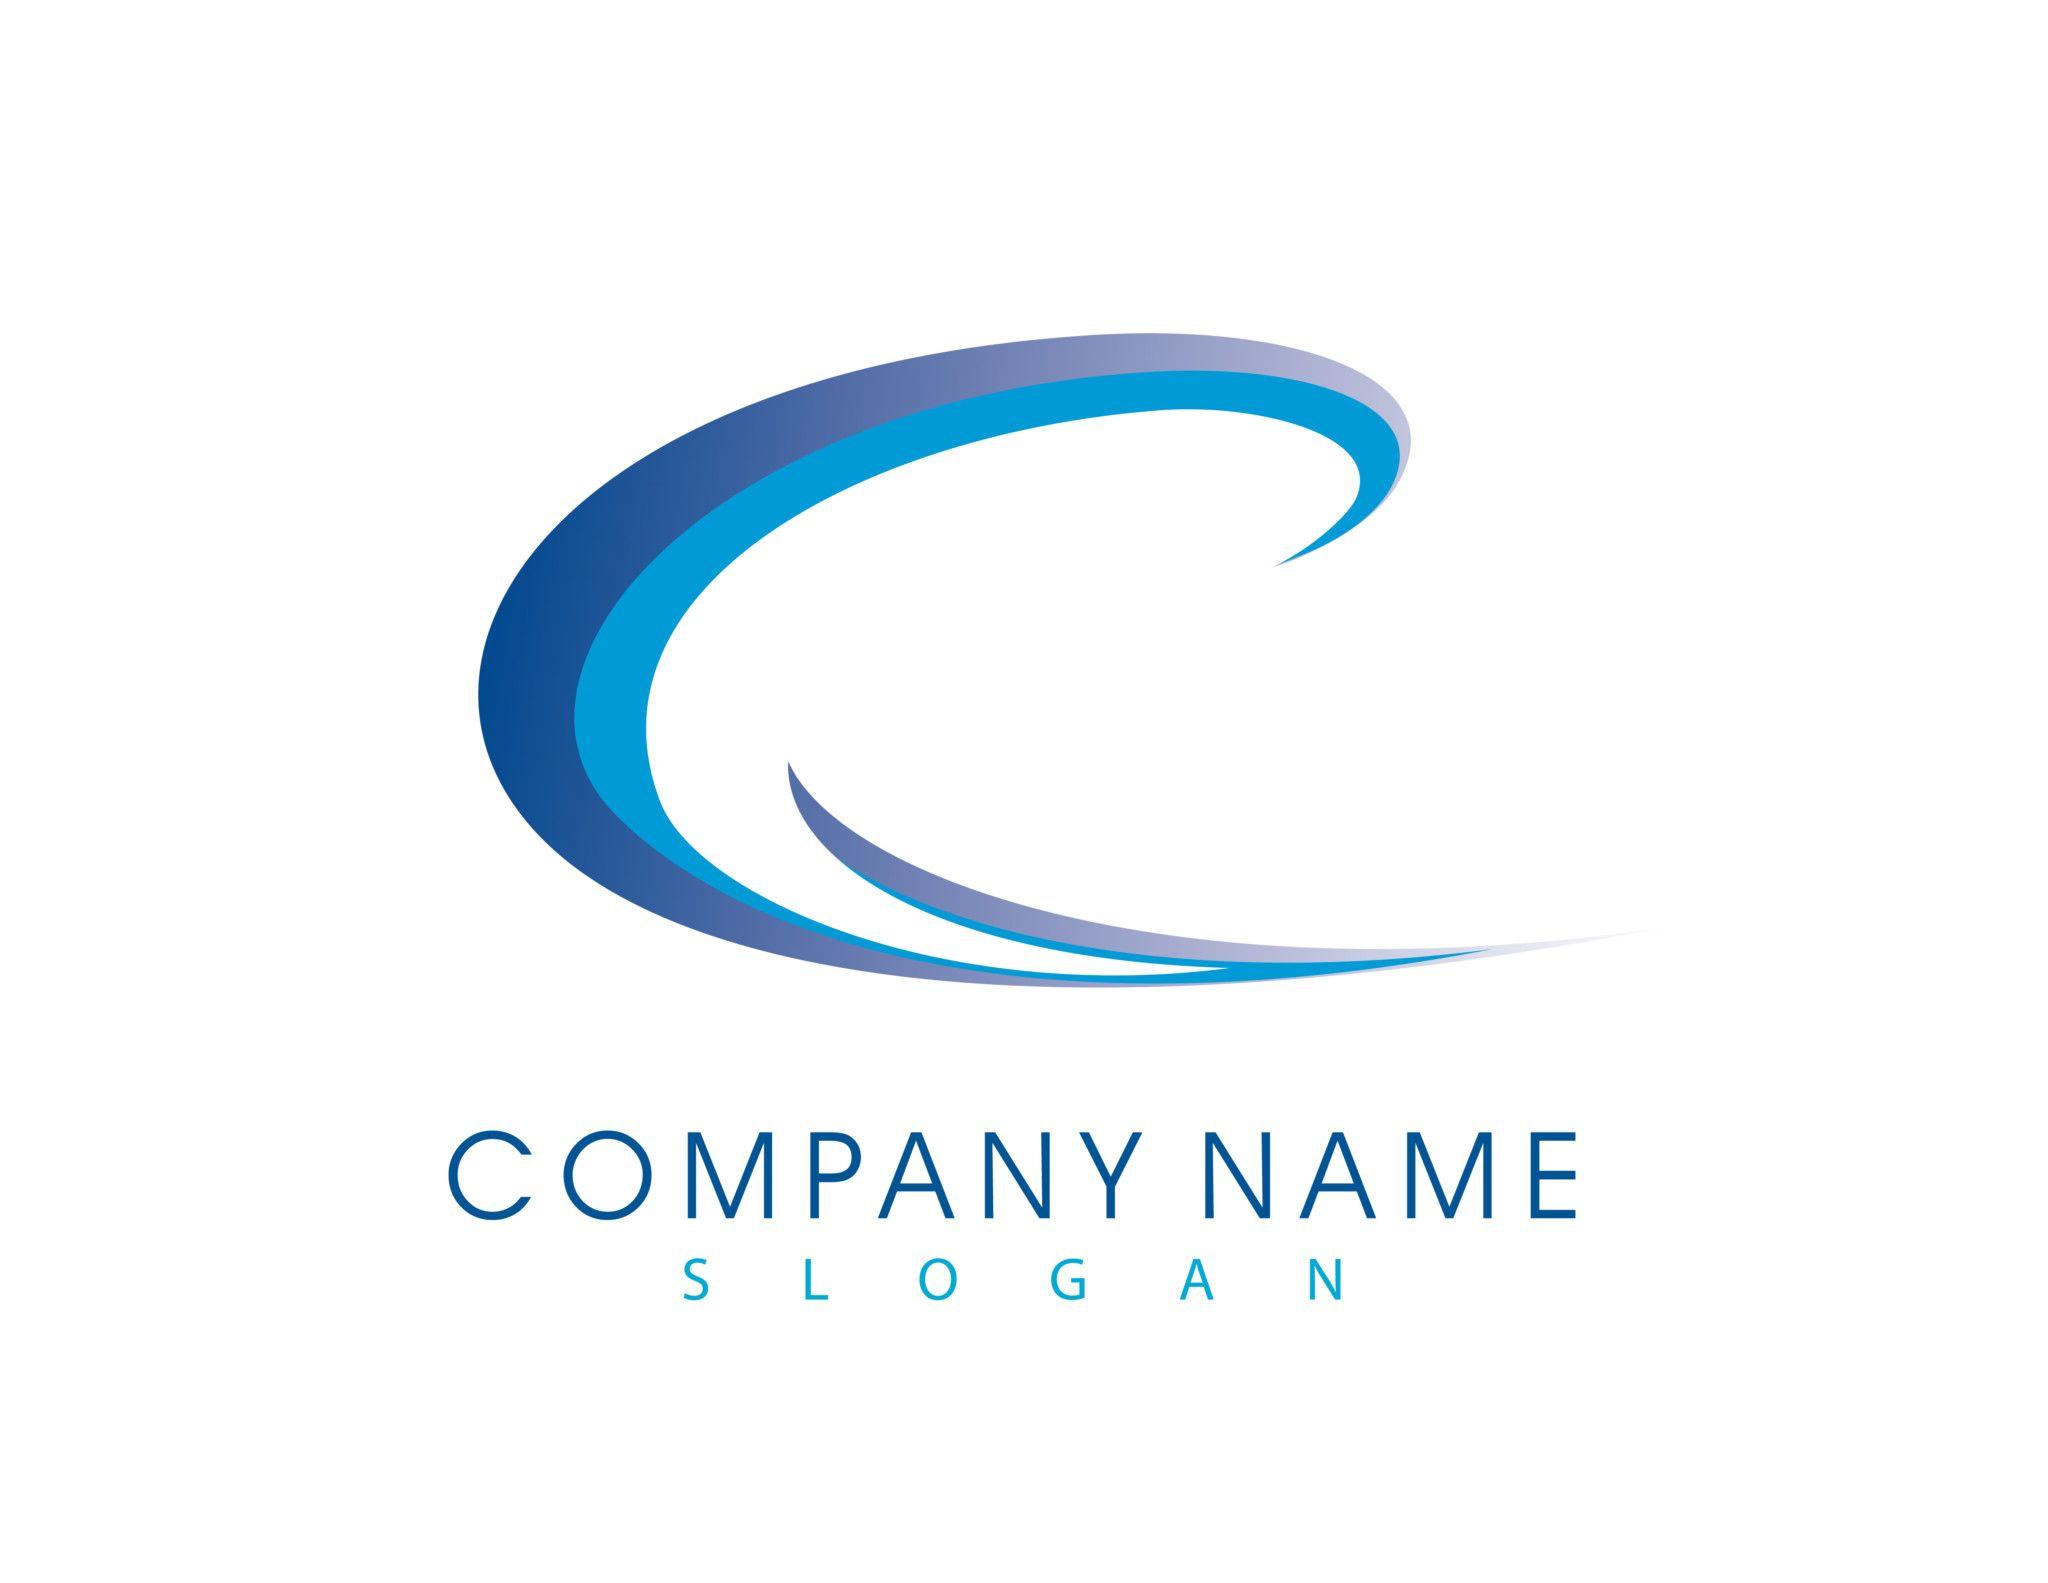 Custom C Logo - Professional Logo Design by Bethel Signs & Graphics, Marietta, GA